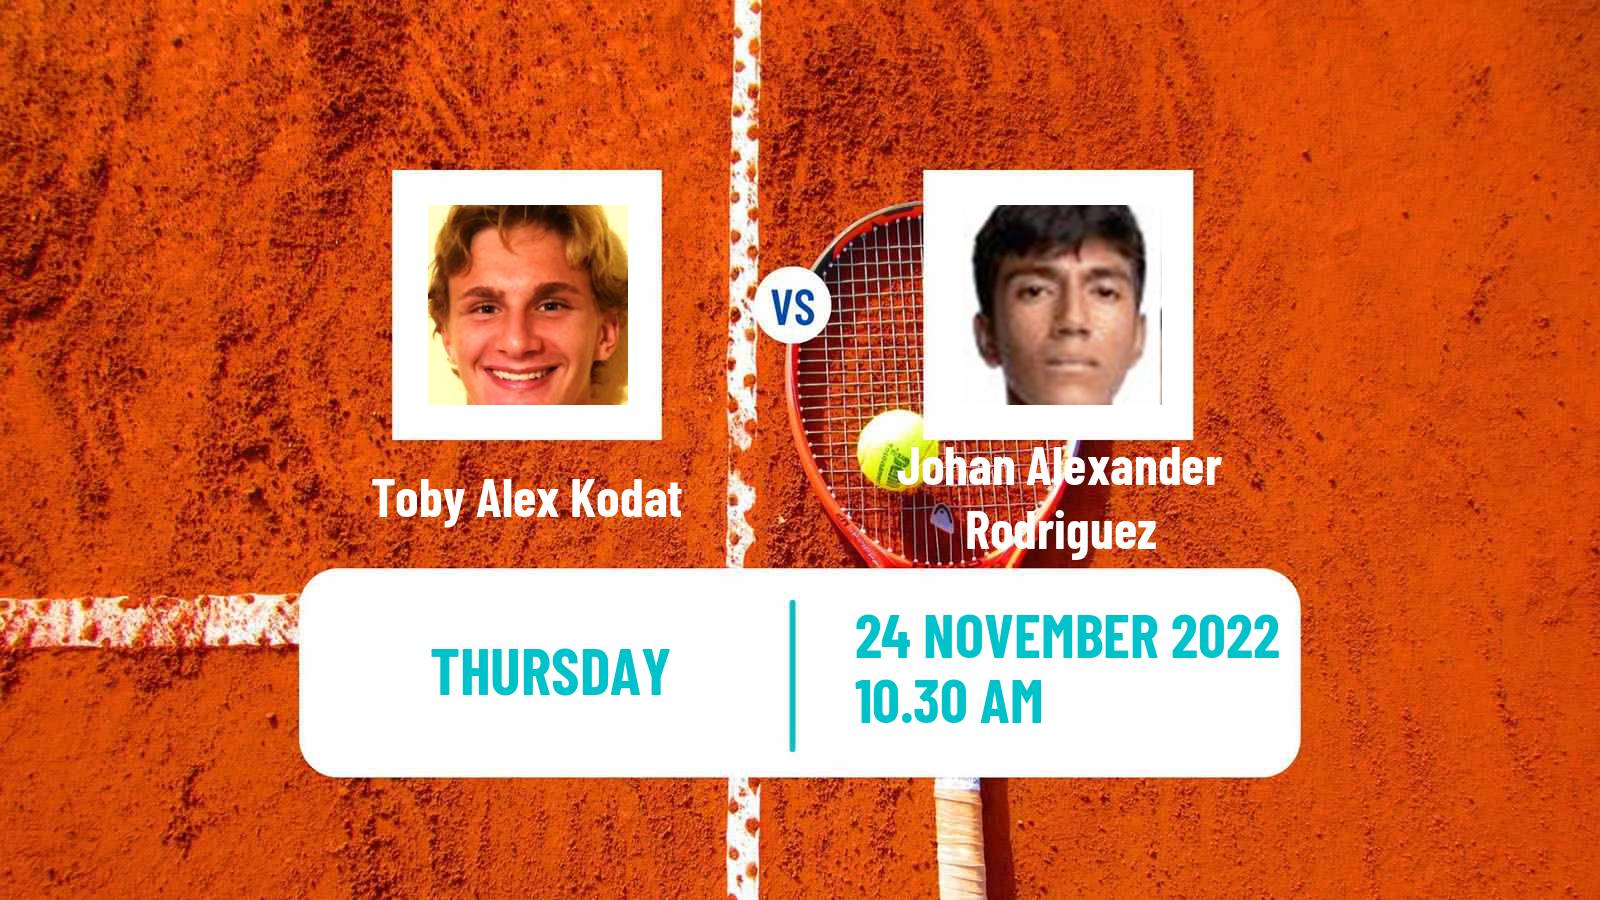 Tennis ITF Tournaments Toby Alex Kodat - Johan Alexander Rodriguez